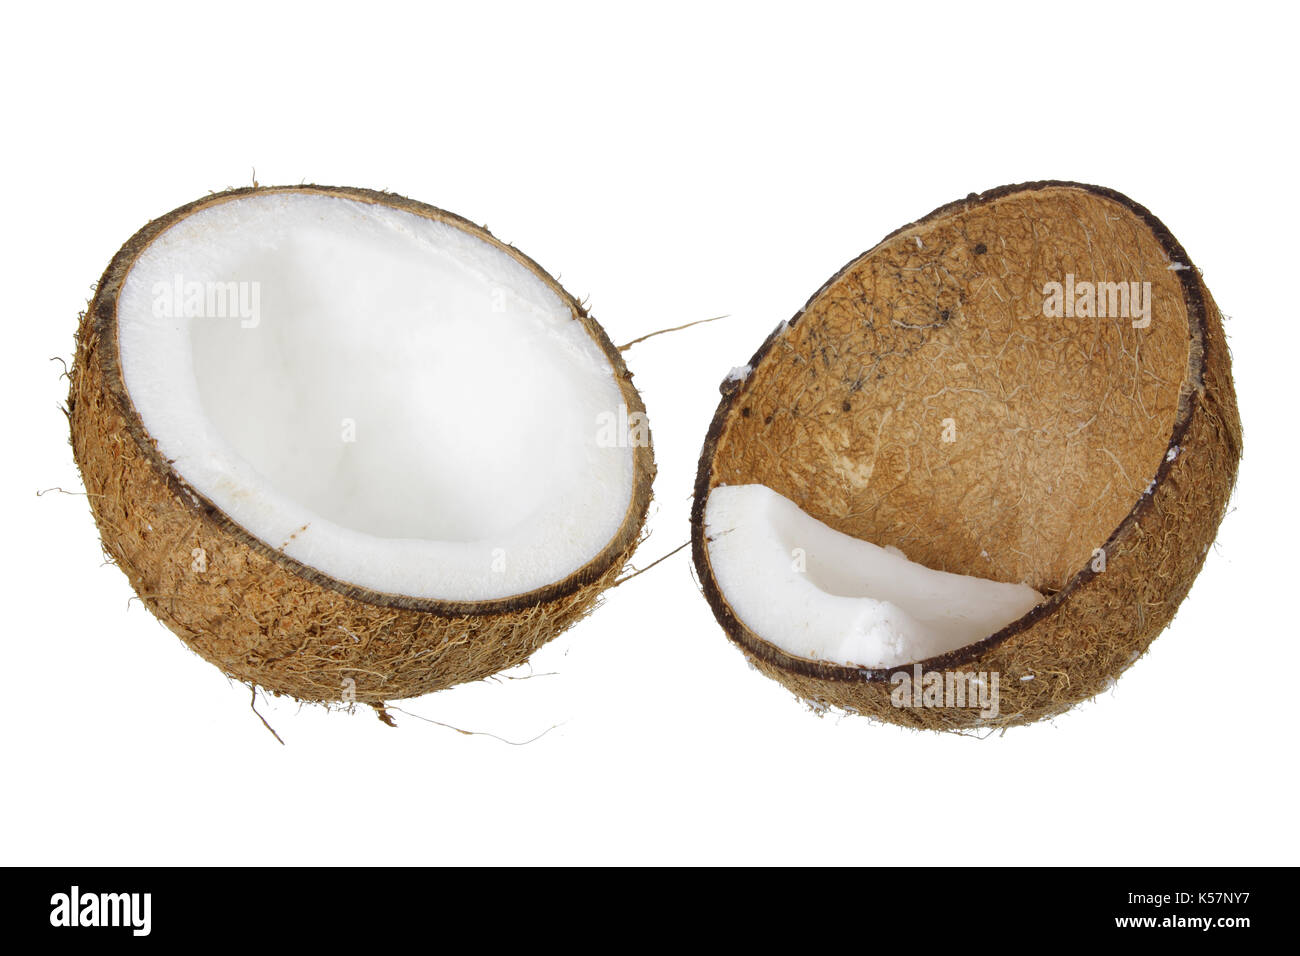 Two Halves of Coconut Stock Photo